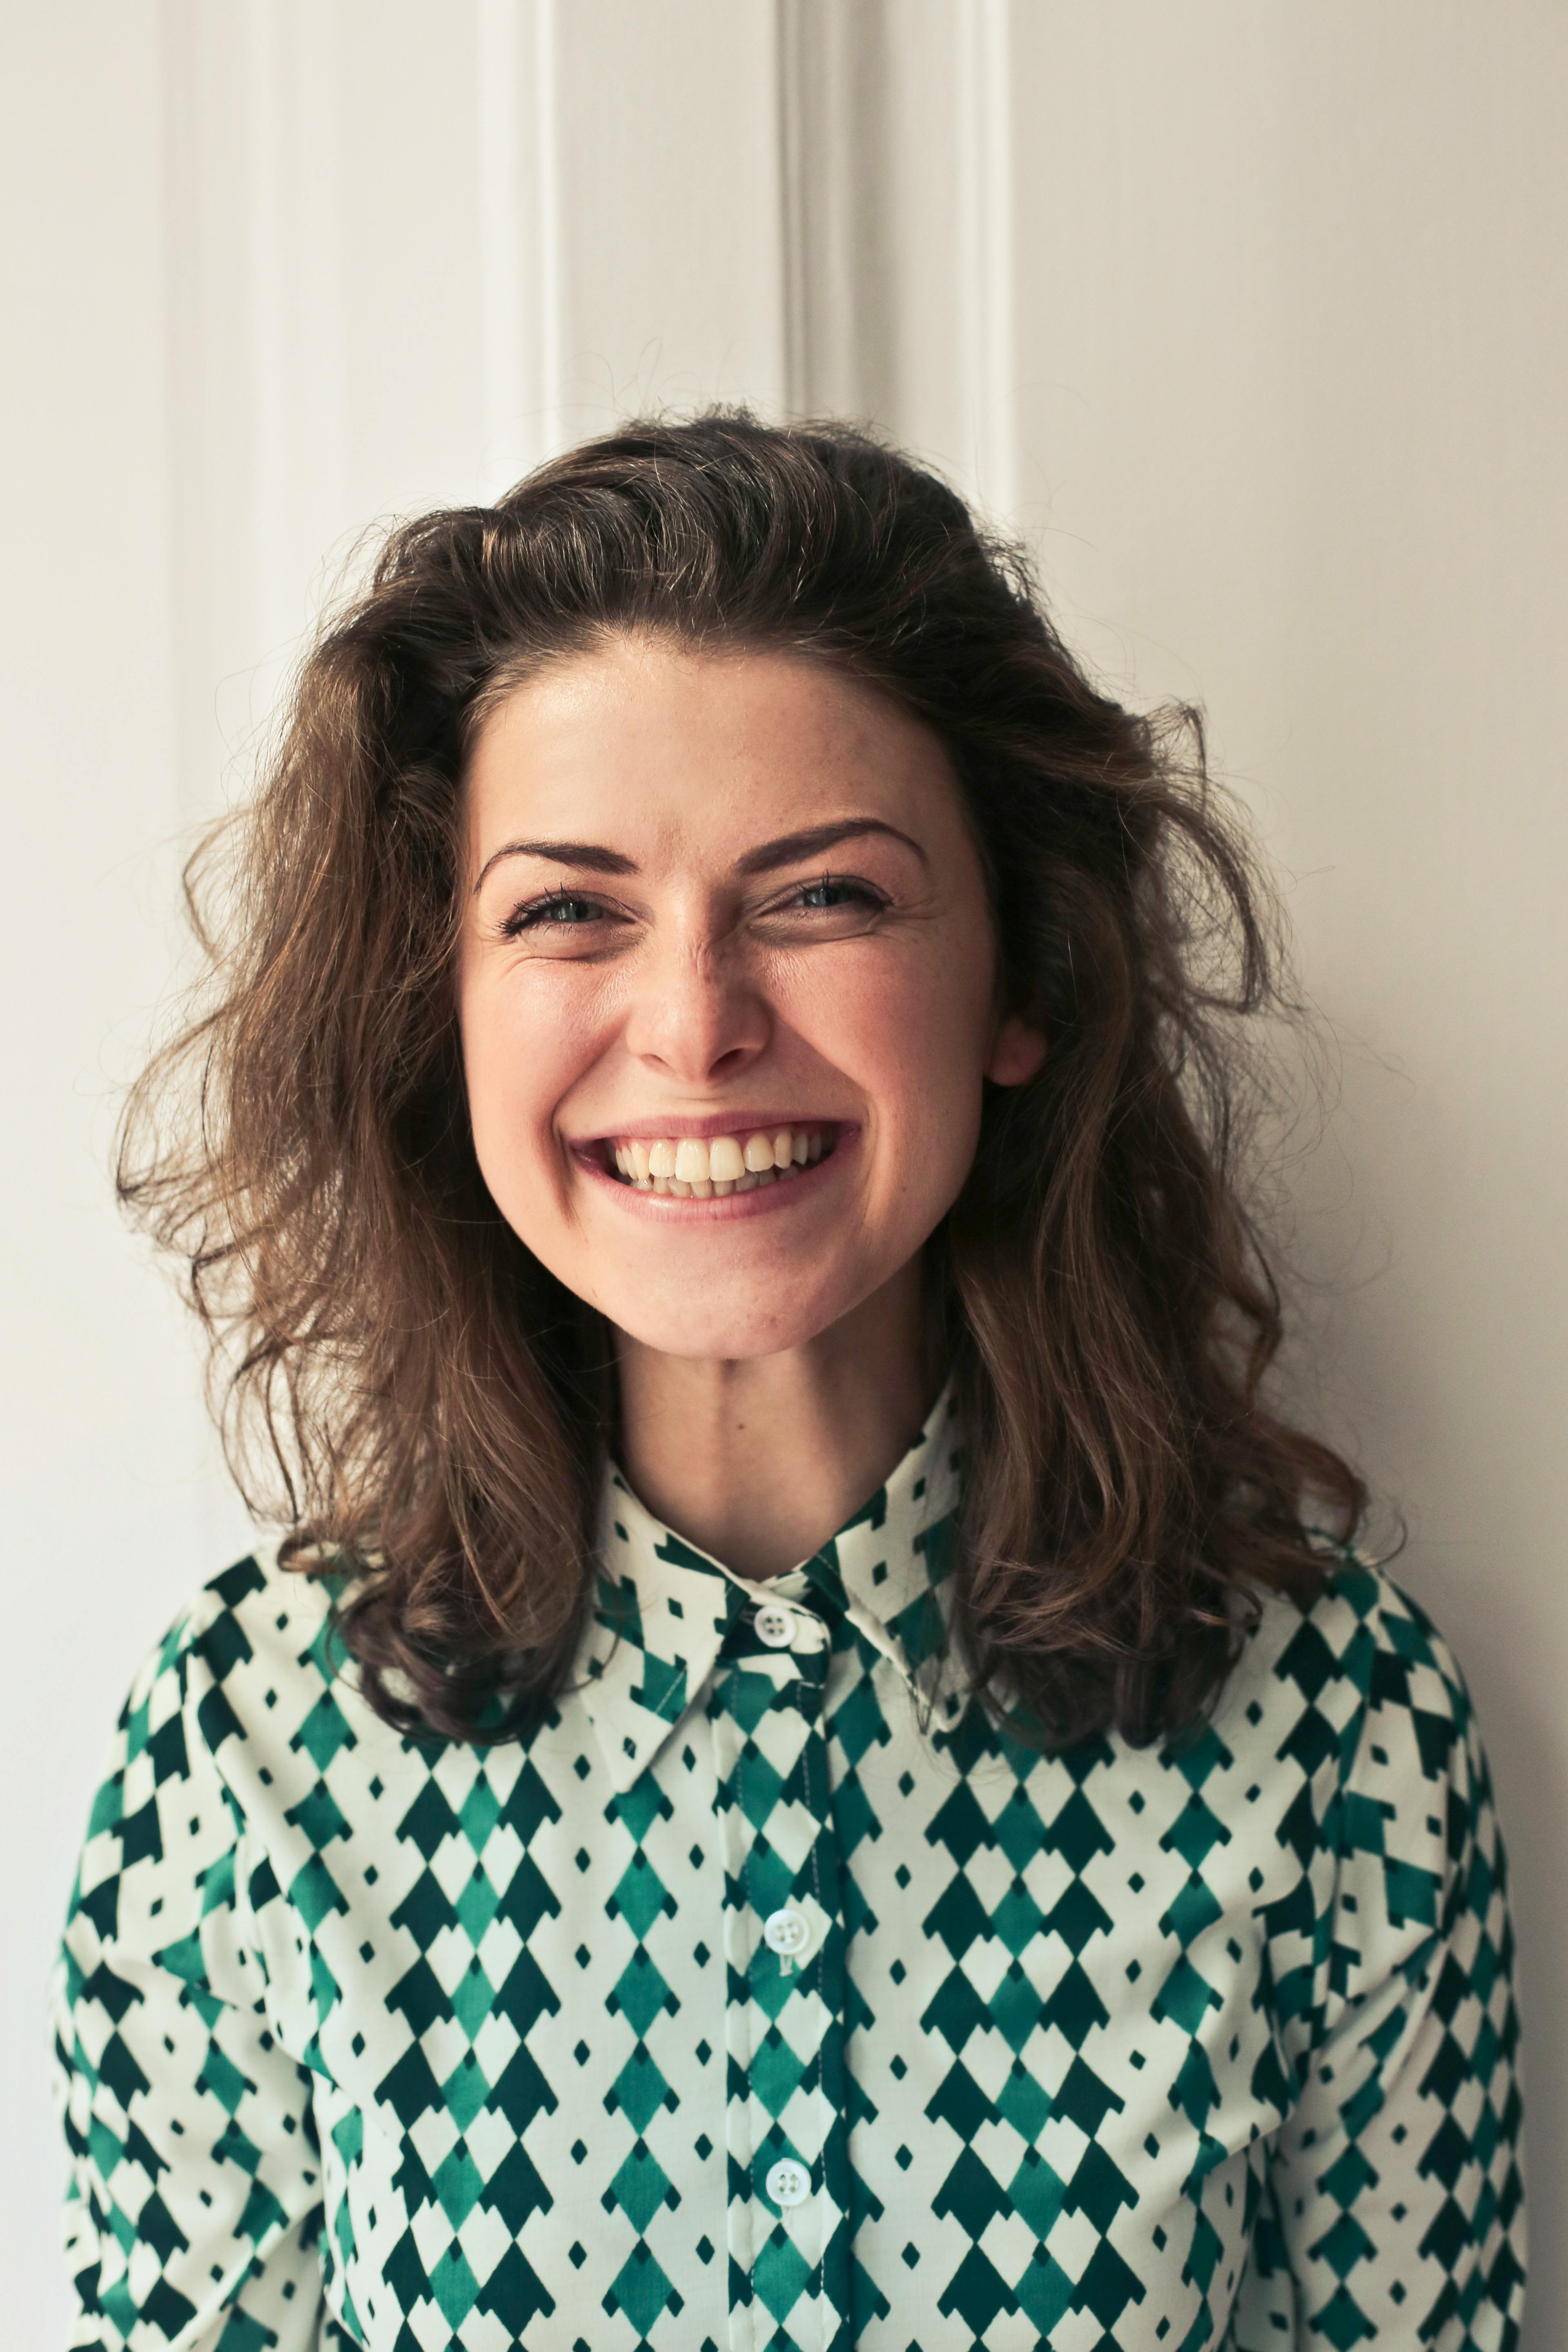 A happy woman smiling | Source: Pexels